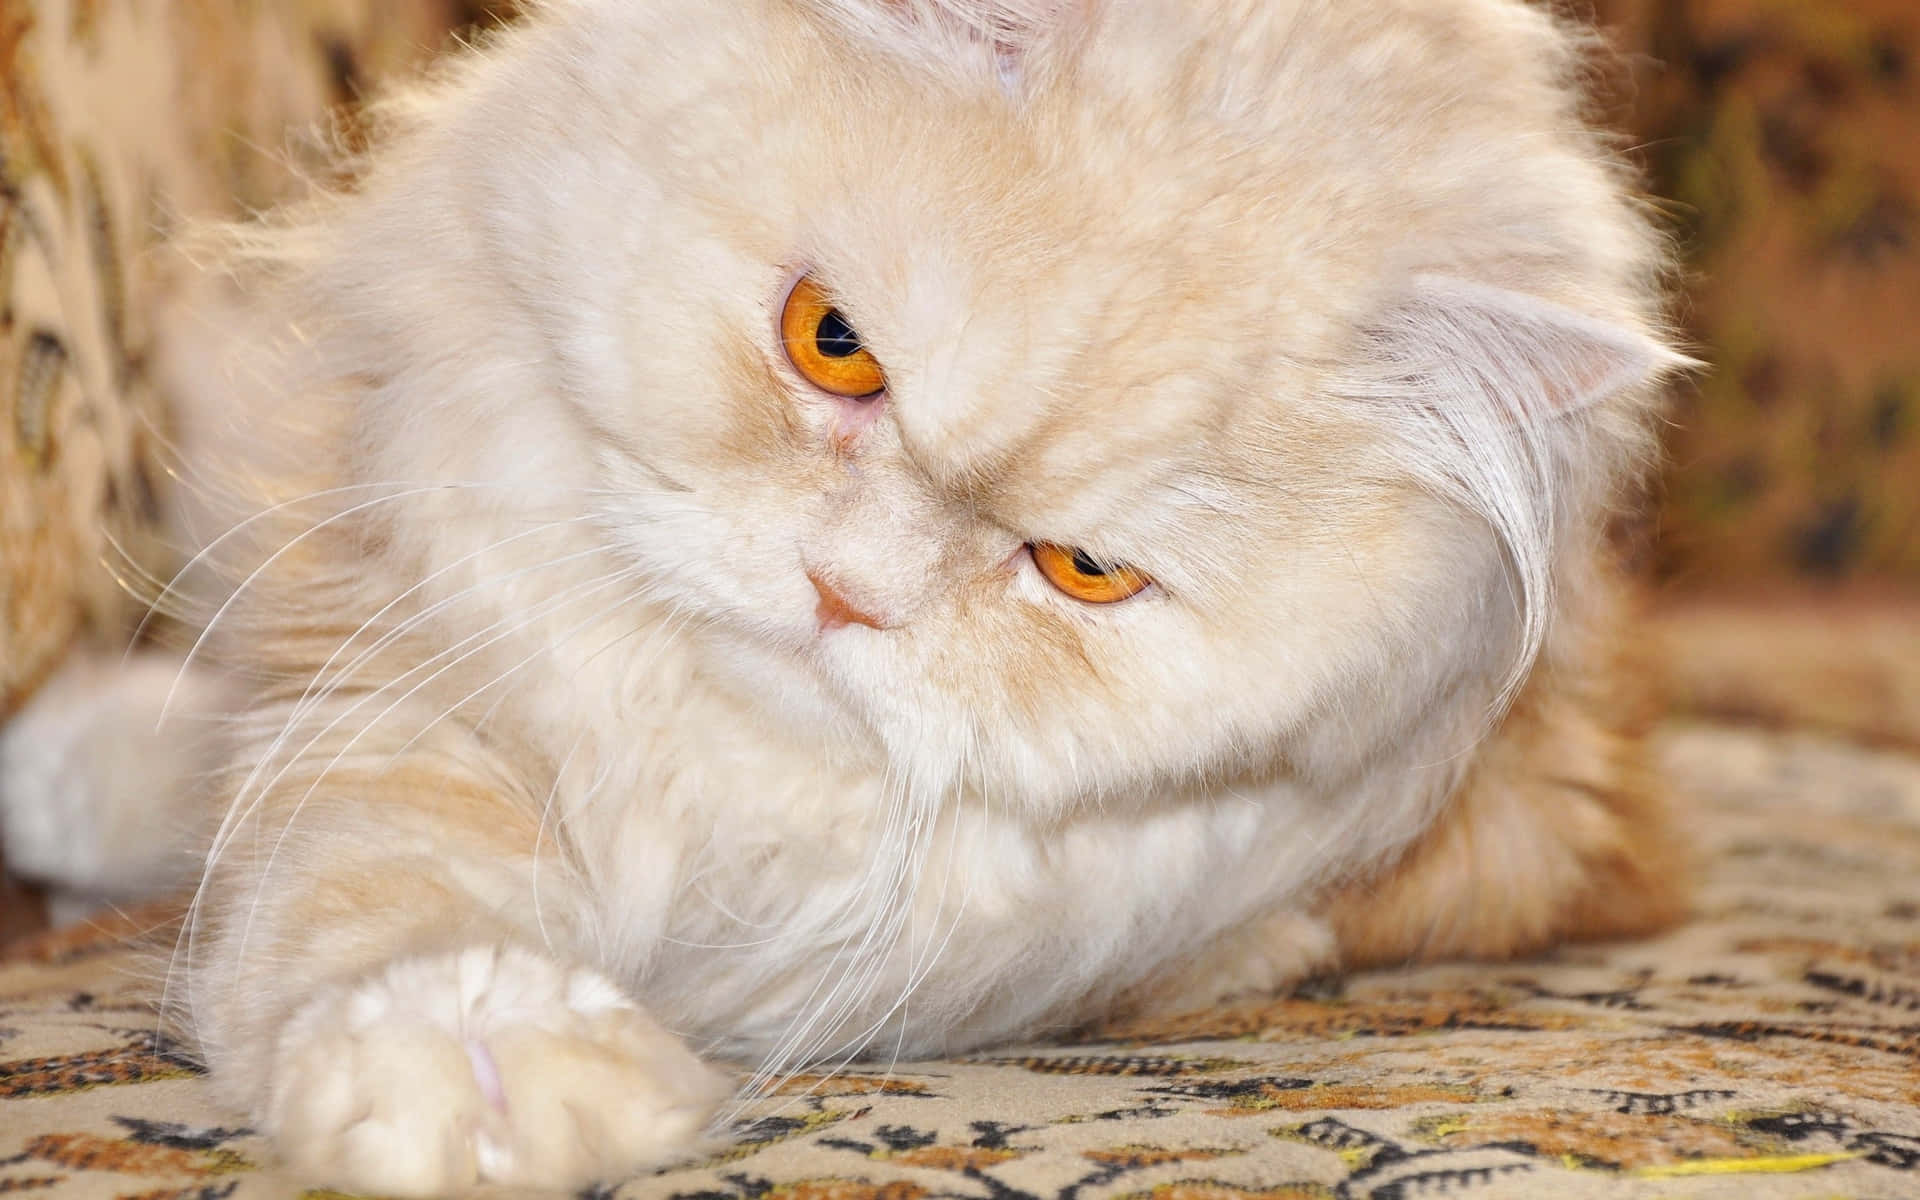 A White Cat With Orange Eyes